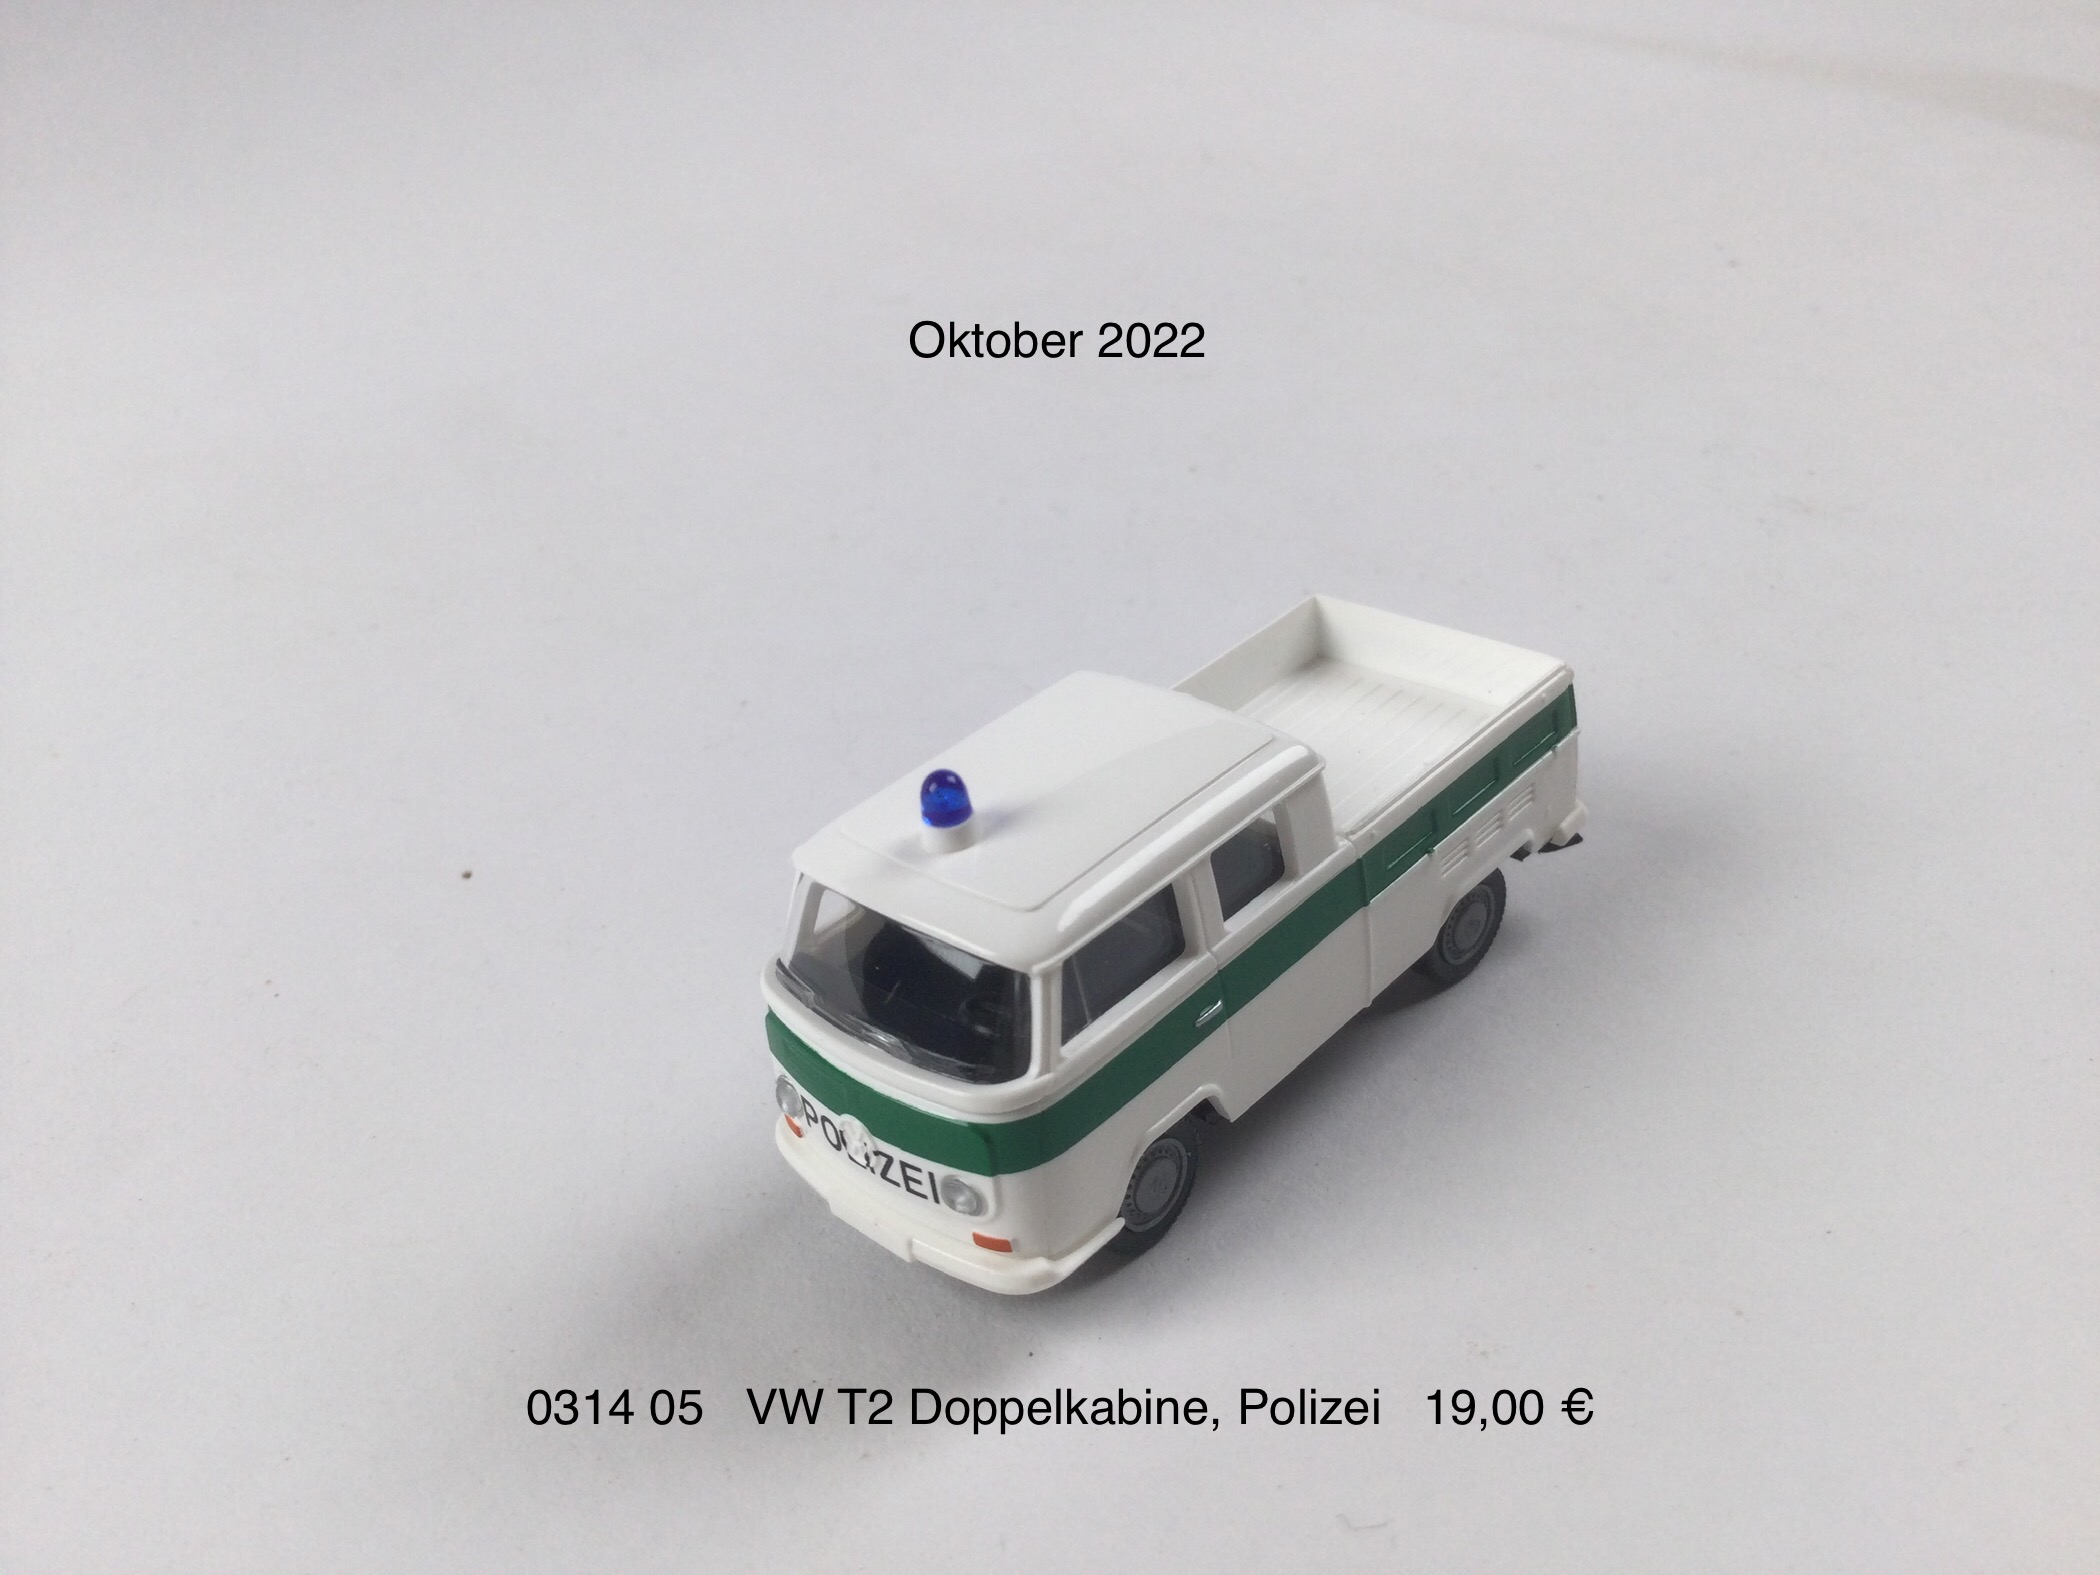 VW T2 Doppelkabine "Polizei"